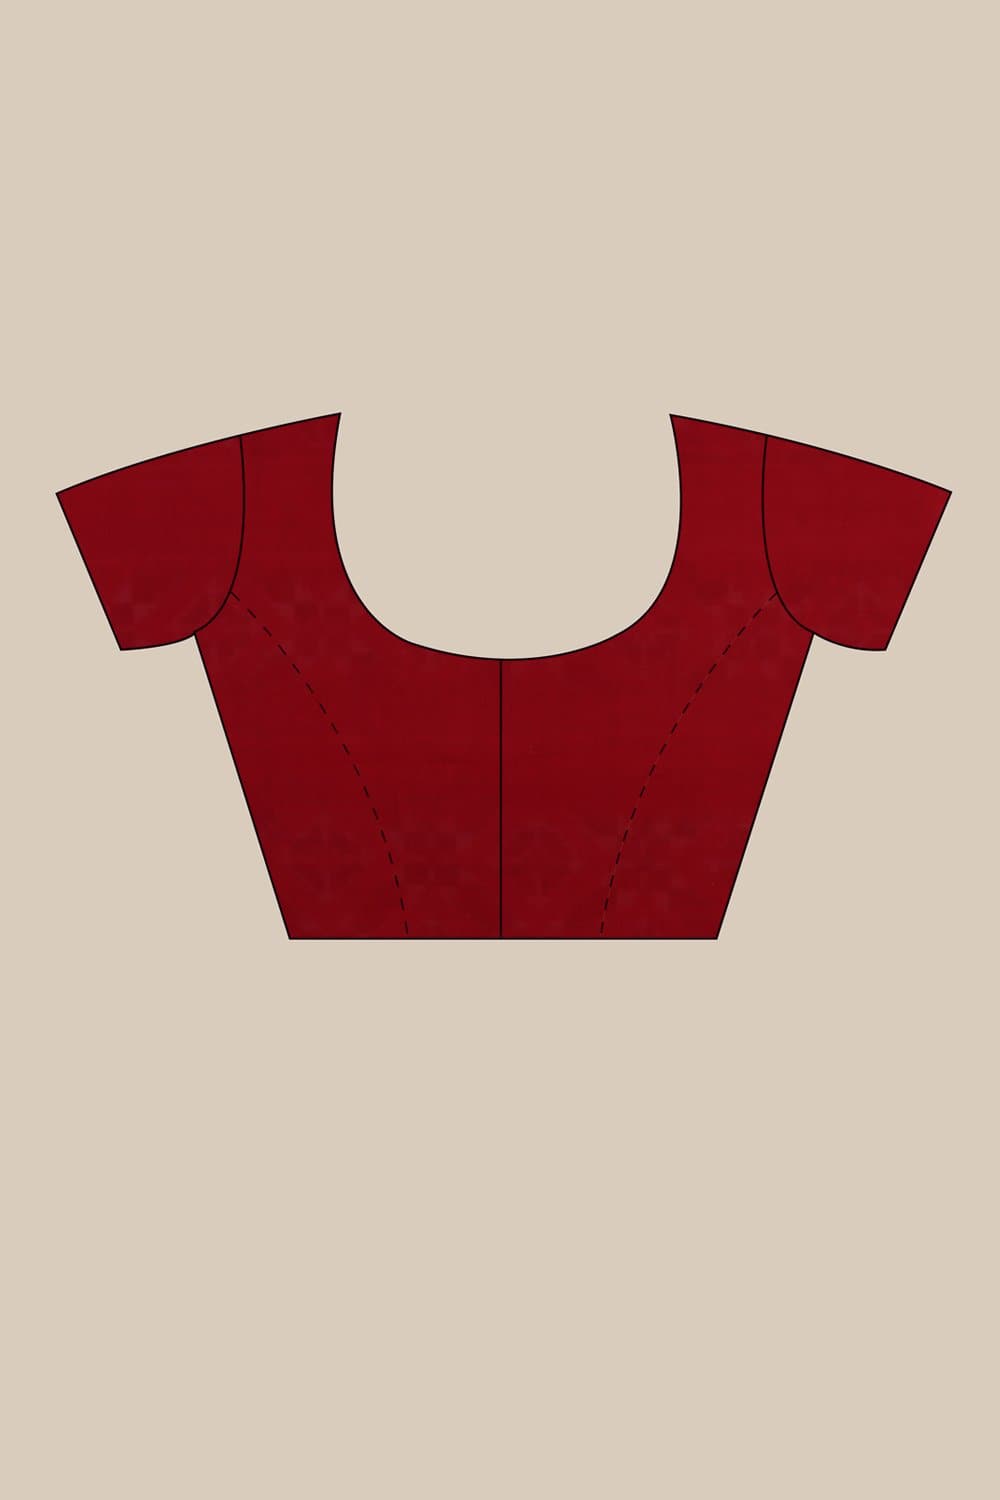  Buy gorgeous red,black telia rumal handwoven ikkat Saree online-karagiri